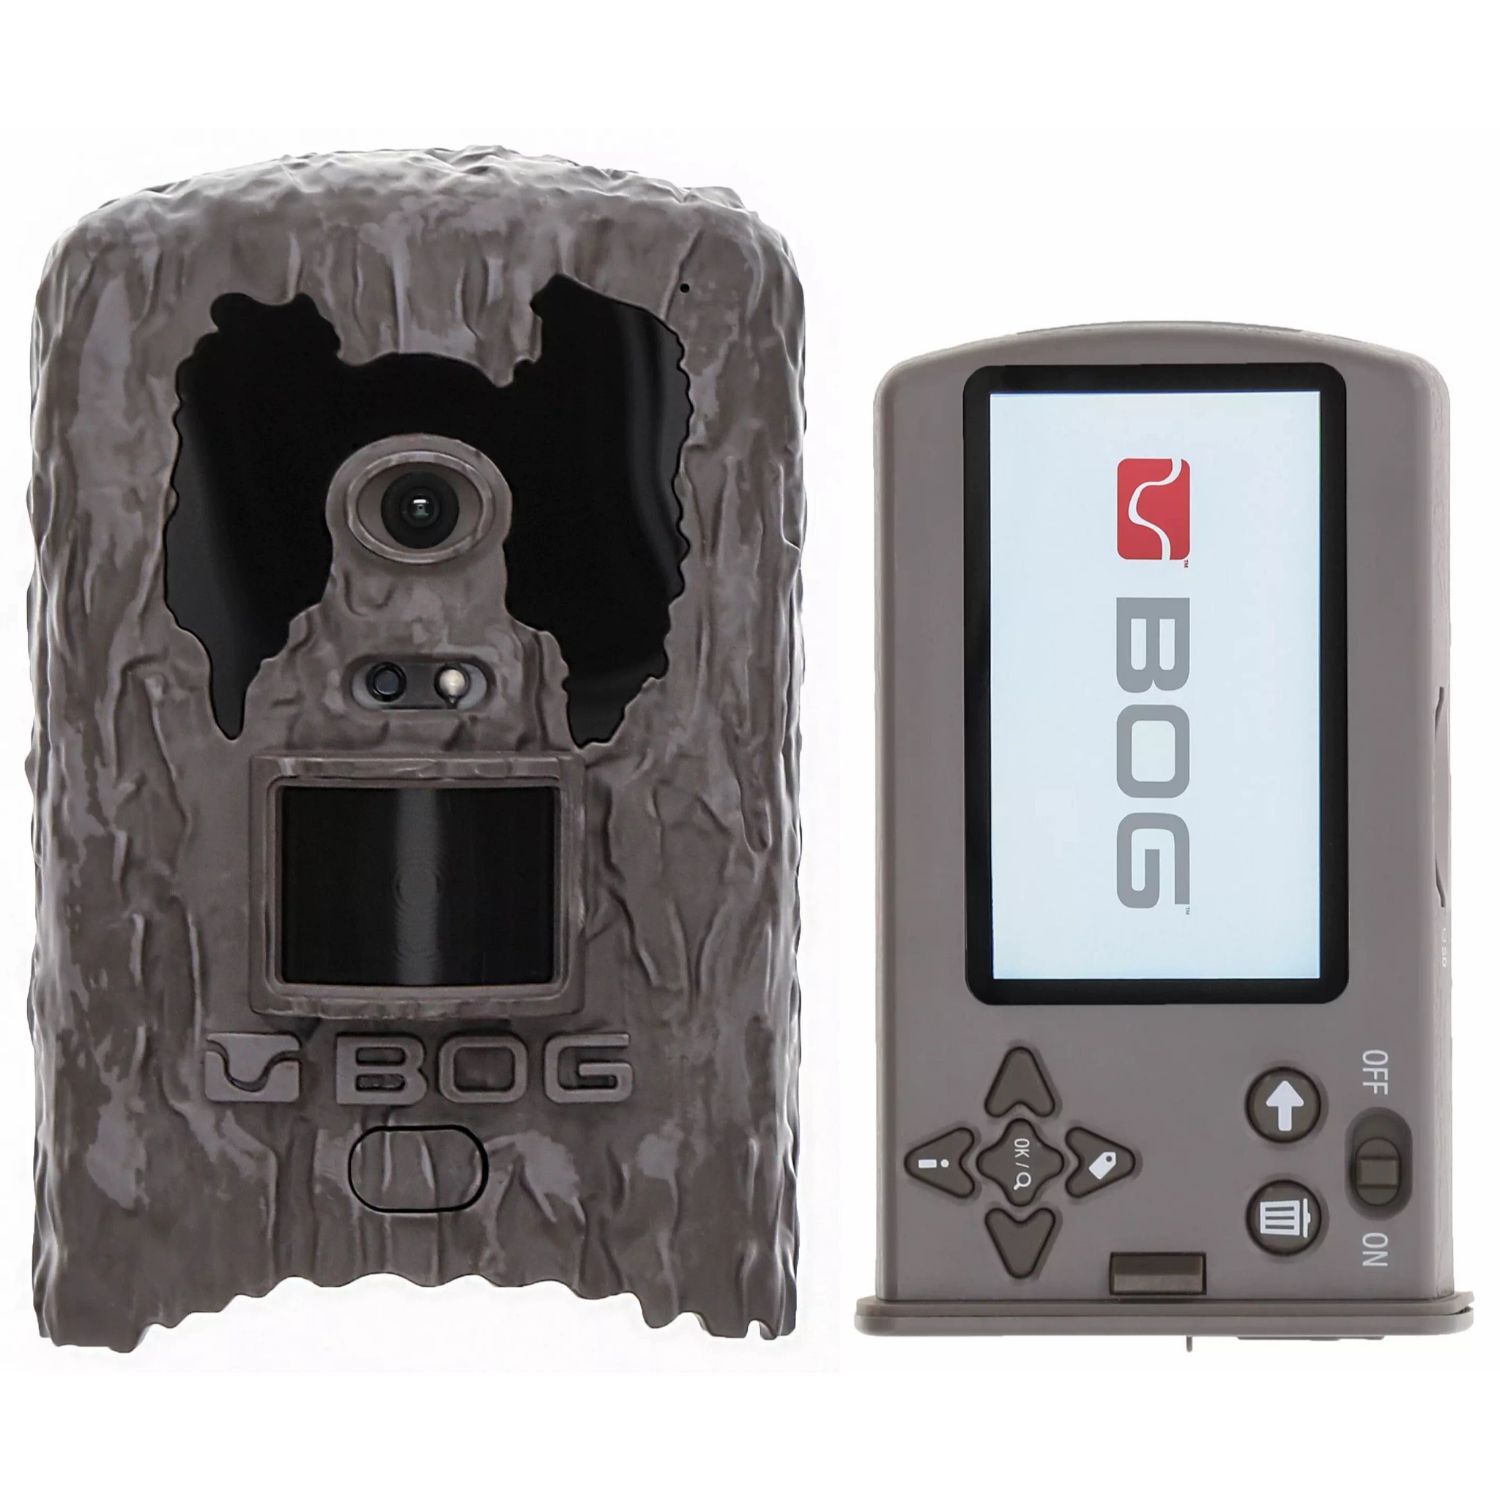 Bog Clandestine 18MP Game Camera 2